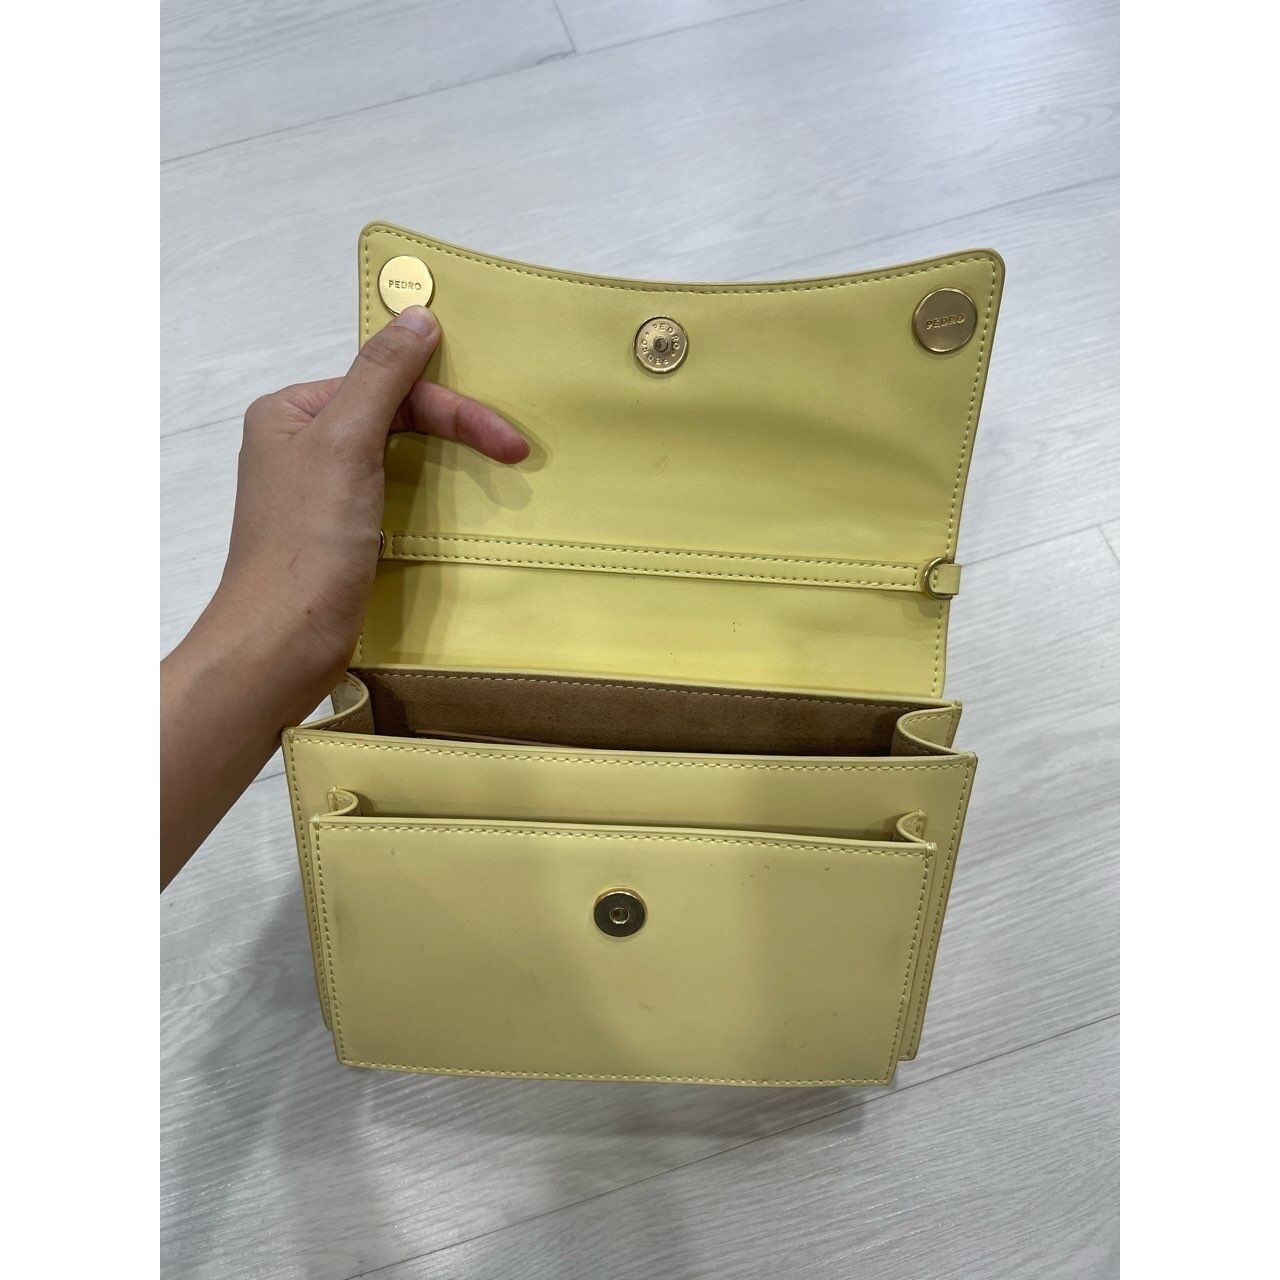 Pedro Yellow Sling Bag